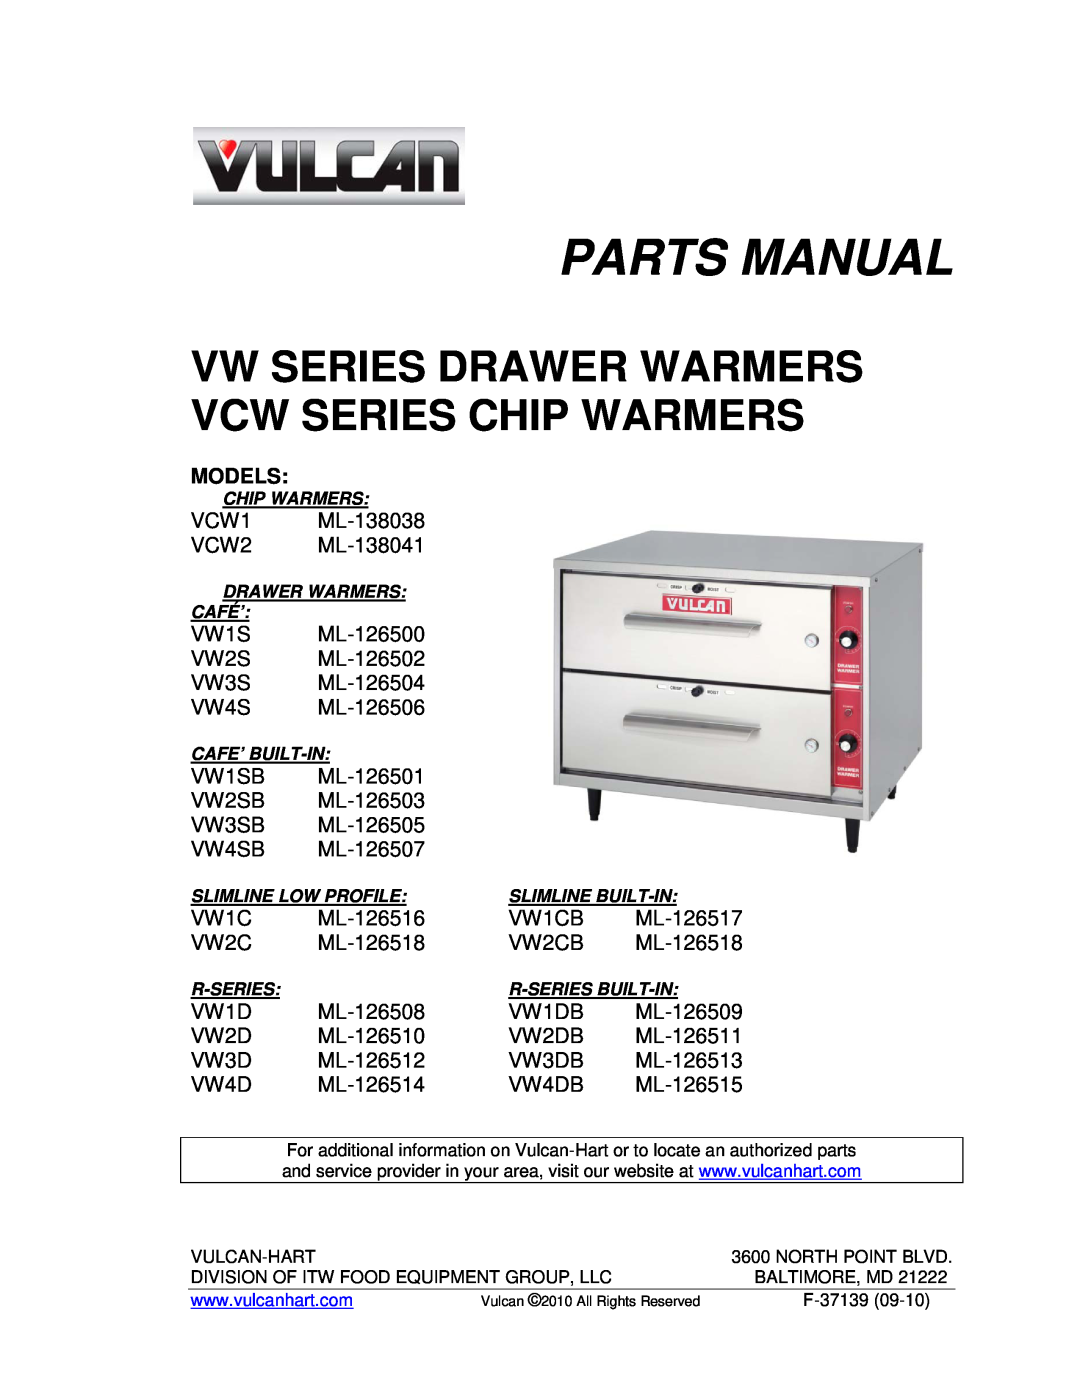 Vulcan-Hart VW2CB ML-126518, VW2C ML-126518 manual Models, Parts Manual, Vw Series Drawer Warmers Vcw Series Chip Warmers 